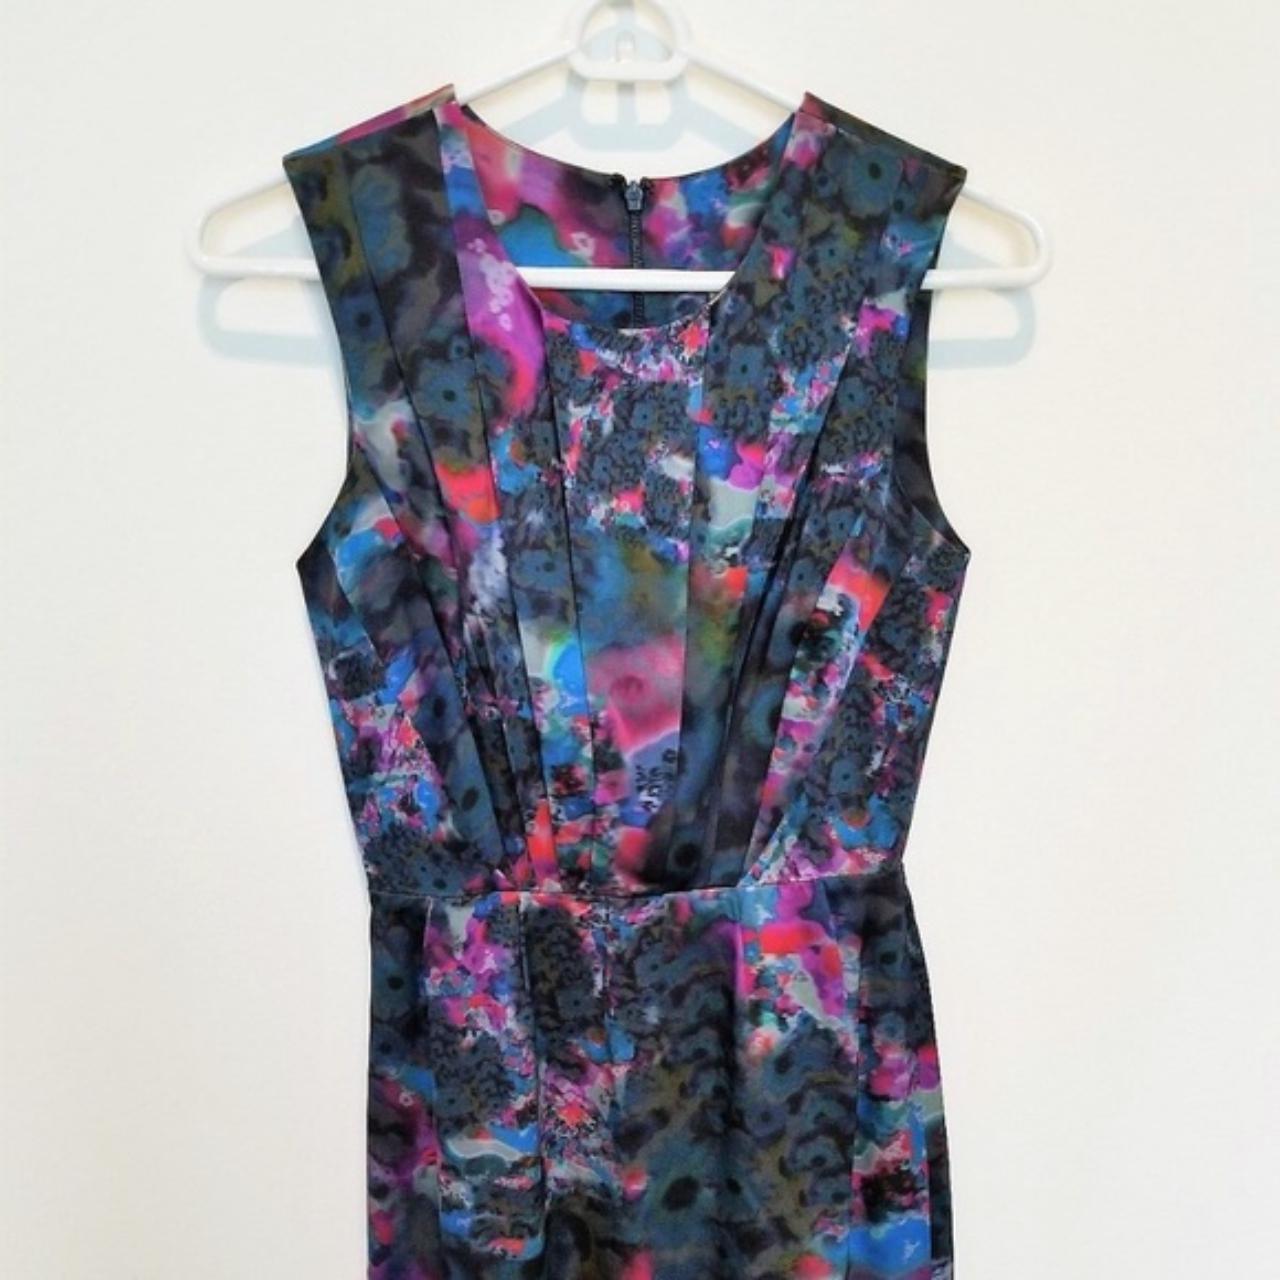 Product Image 1 - erdem floral silk sleeveless dress

beautiful